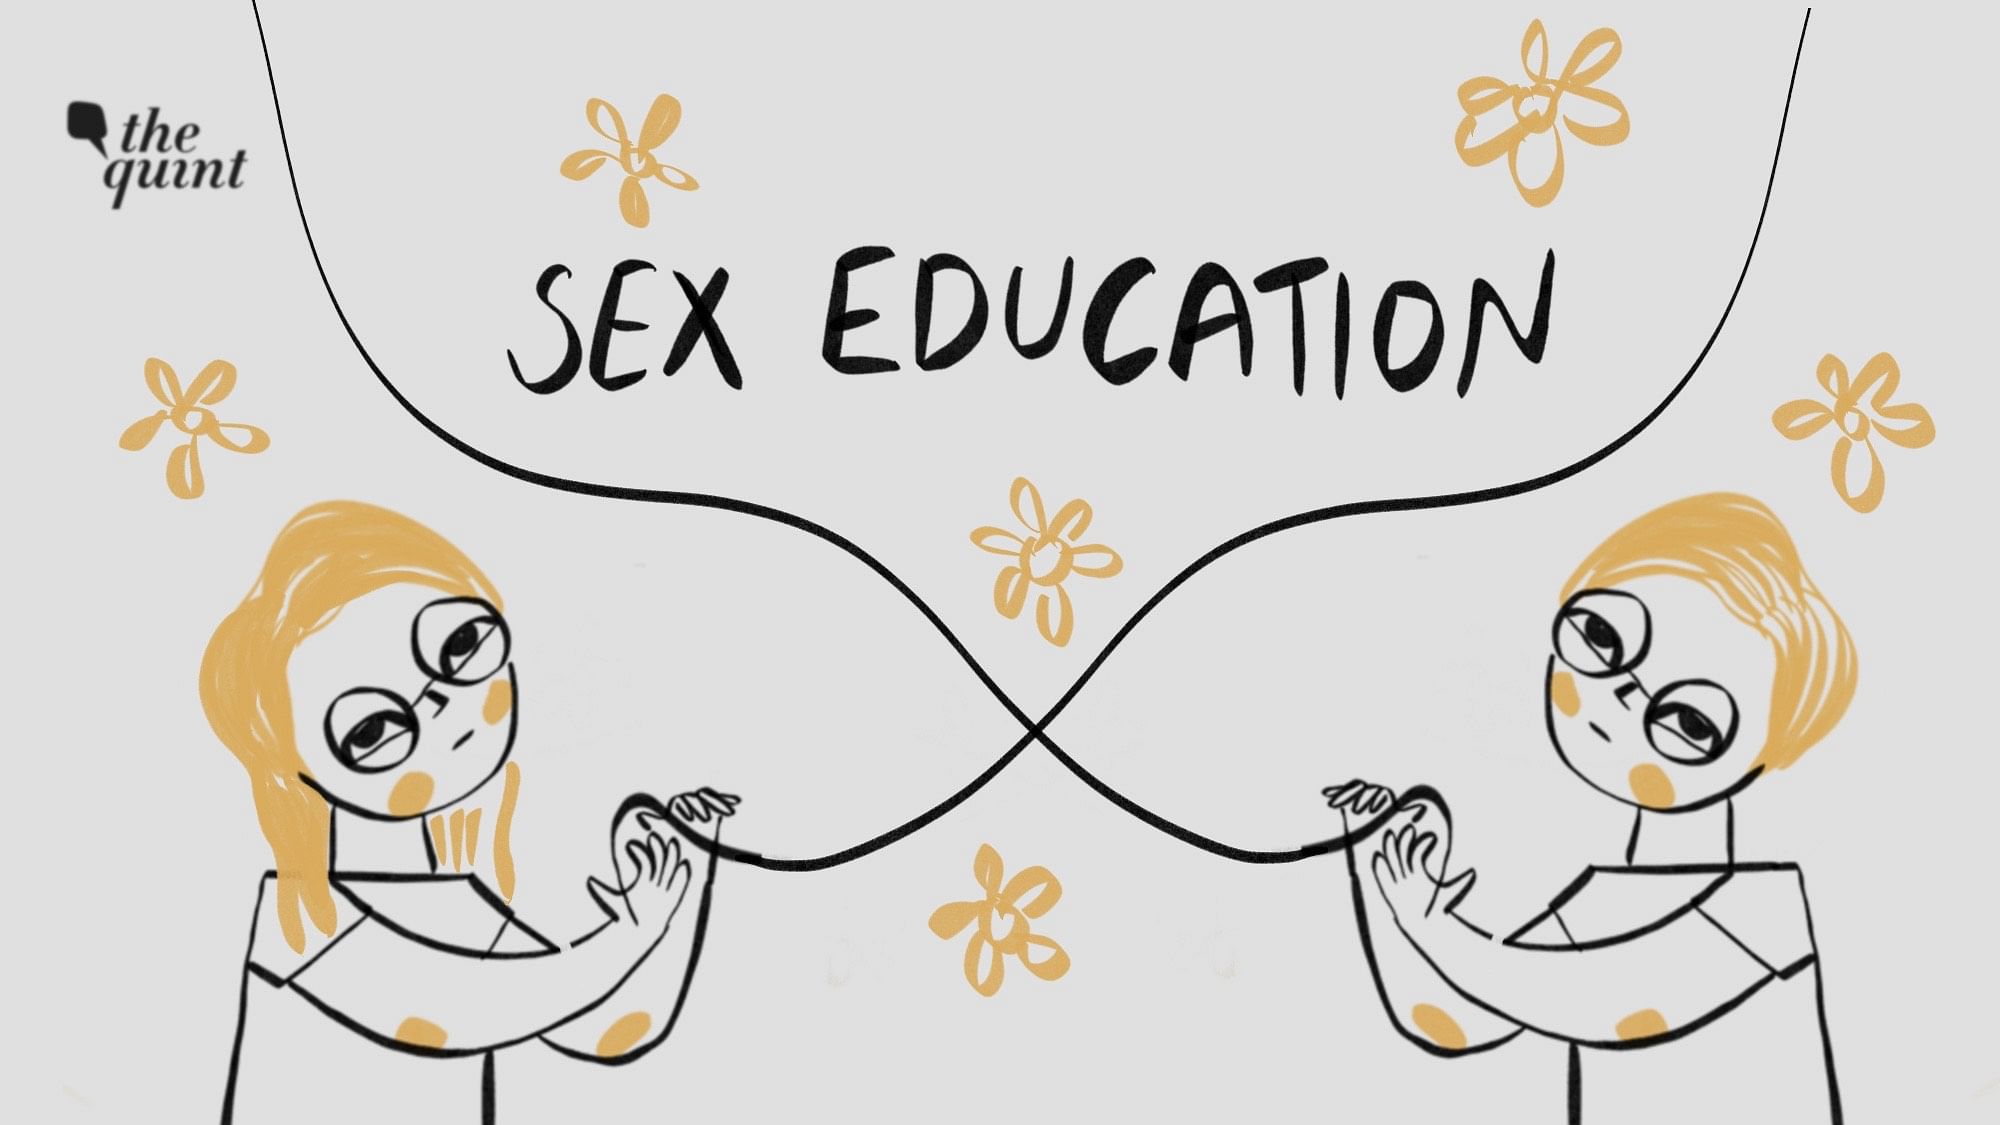 sex education in schools in india